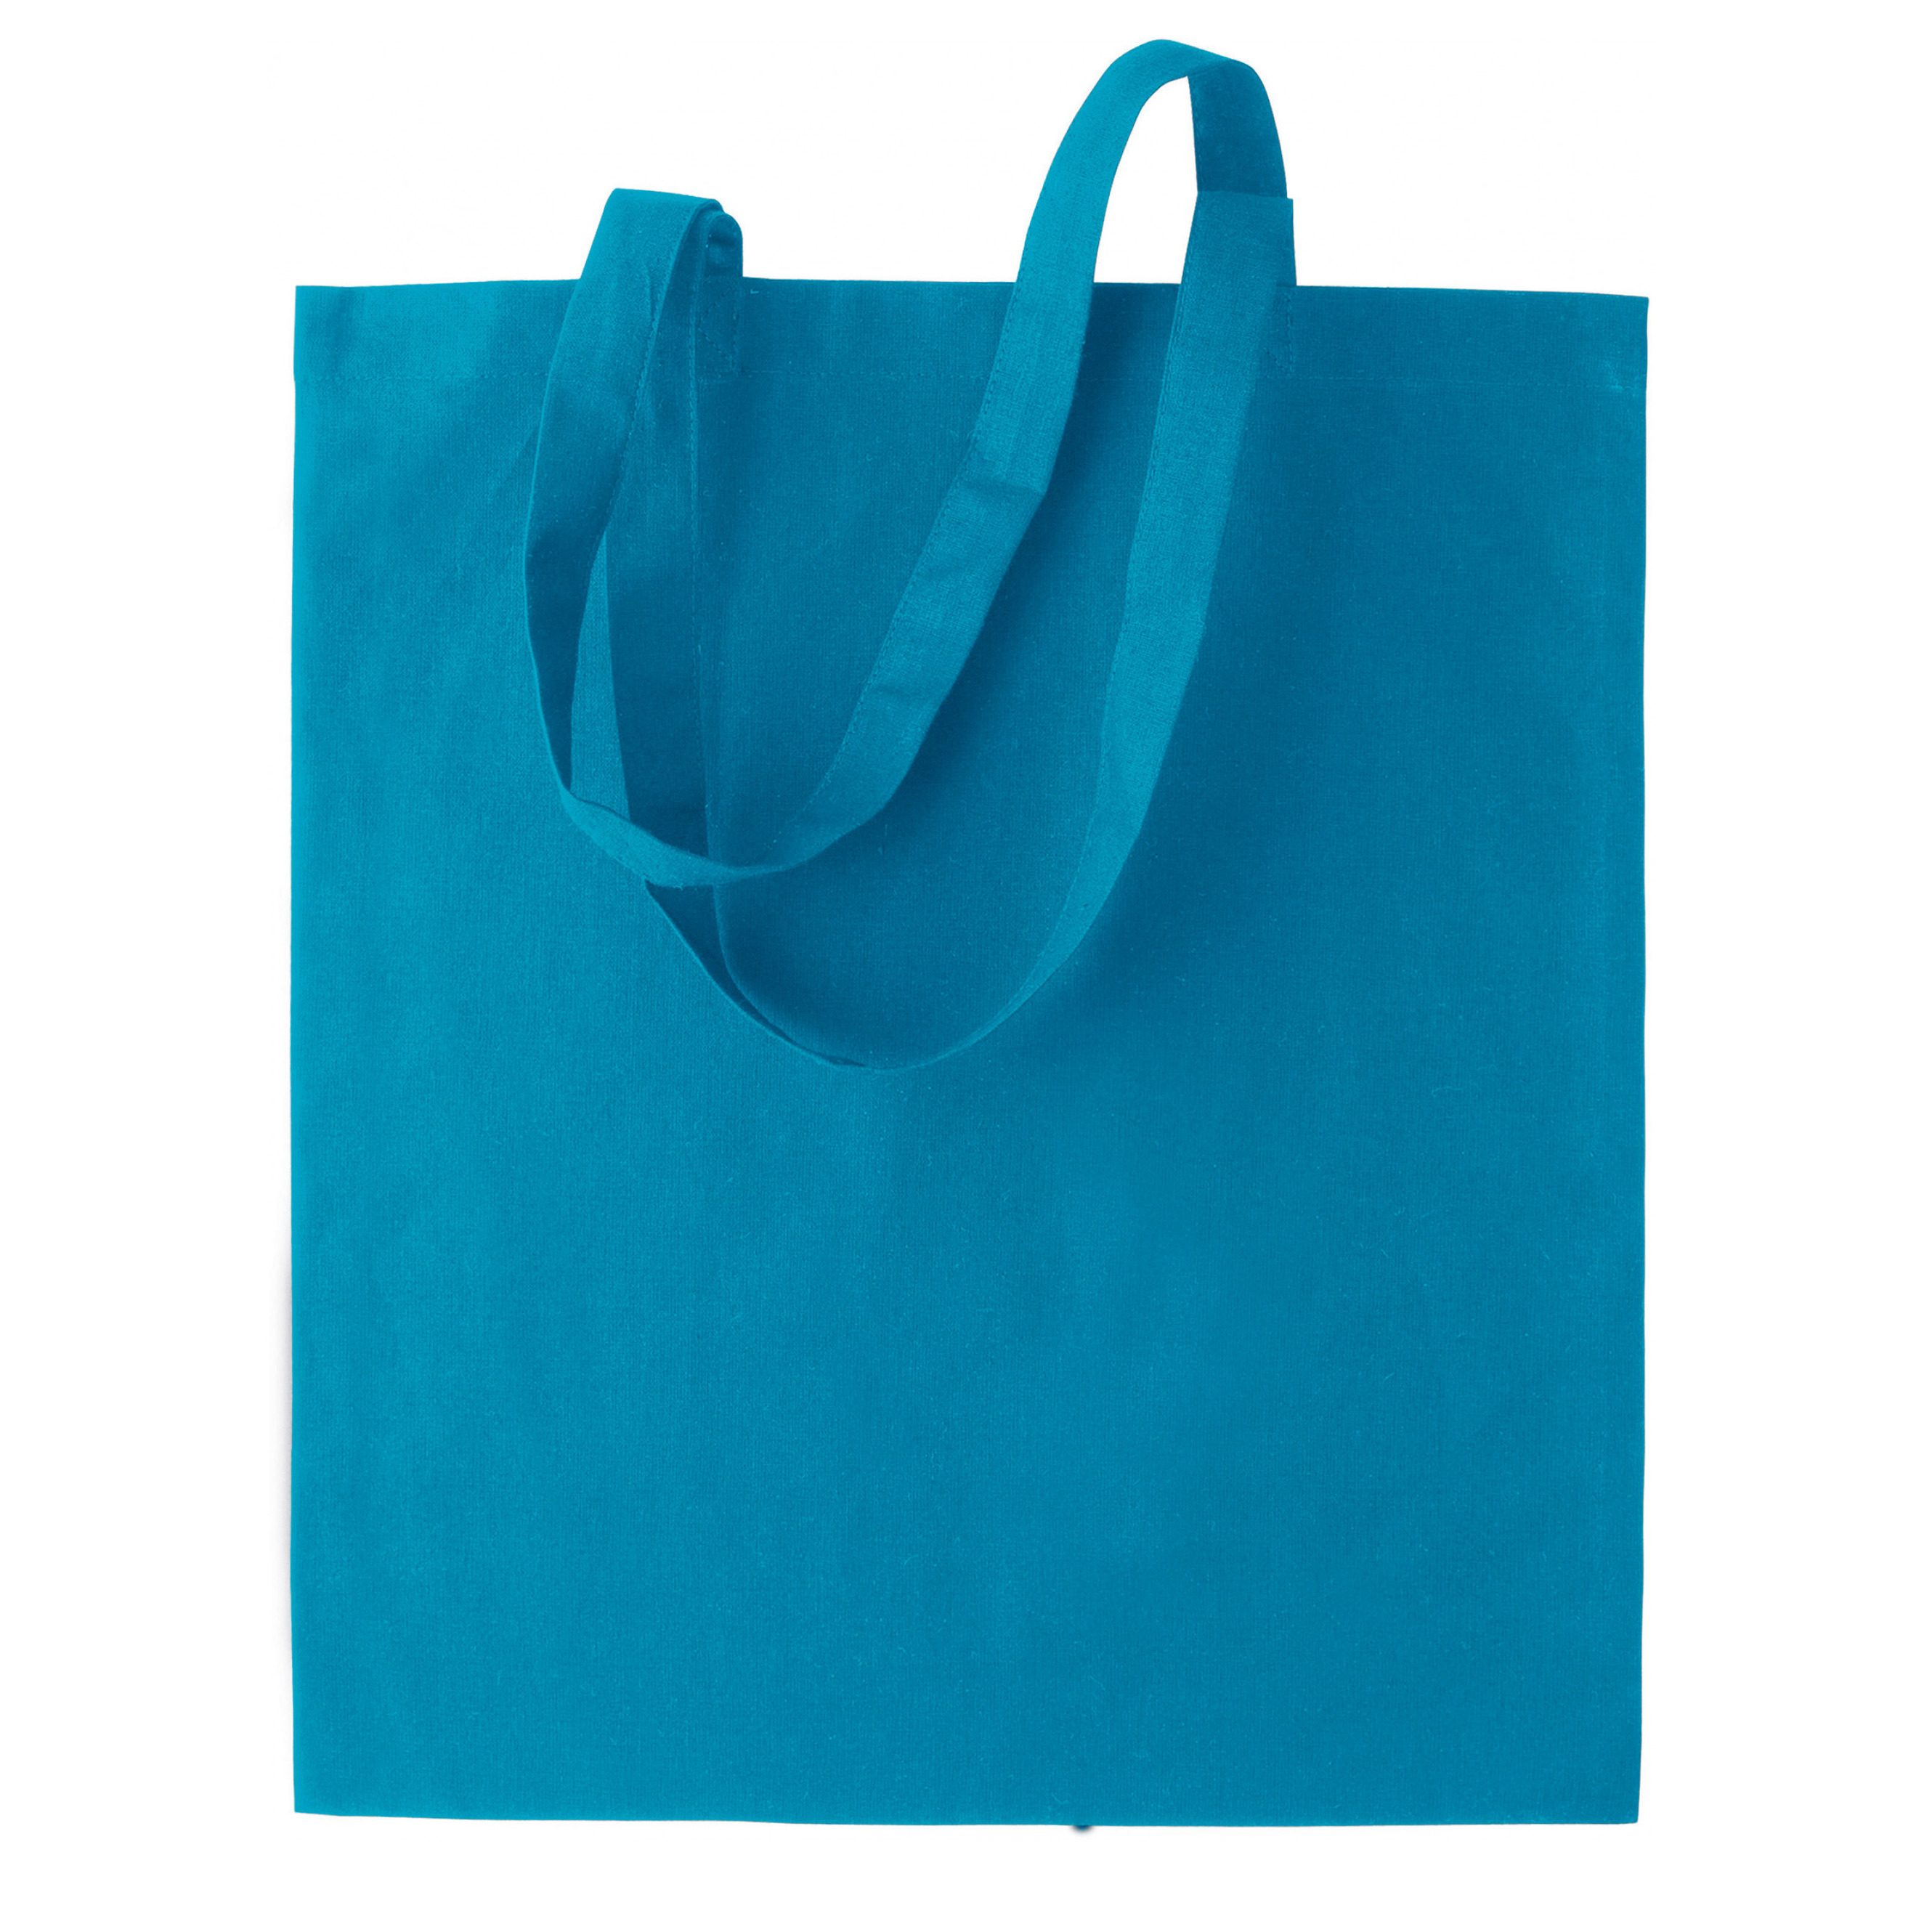 Basic katoenen schoudertasje in het turquoise blauw 38 x 42 cm